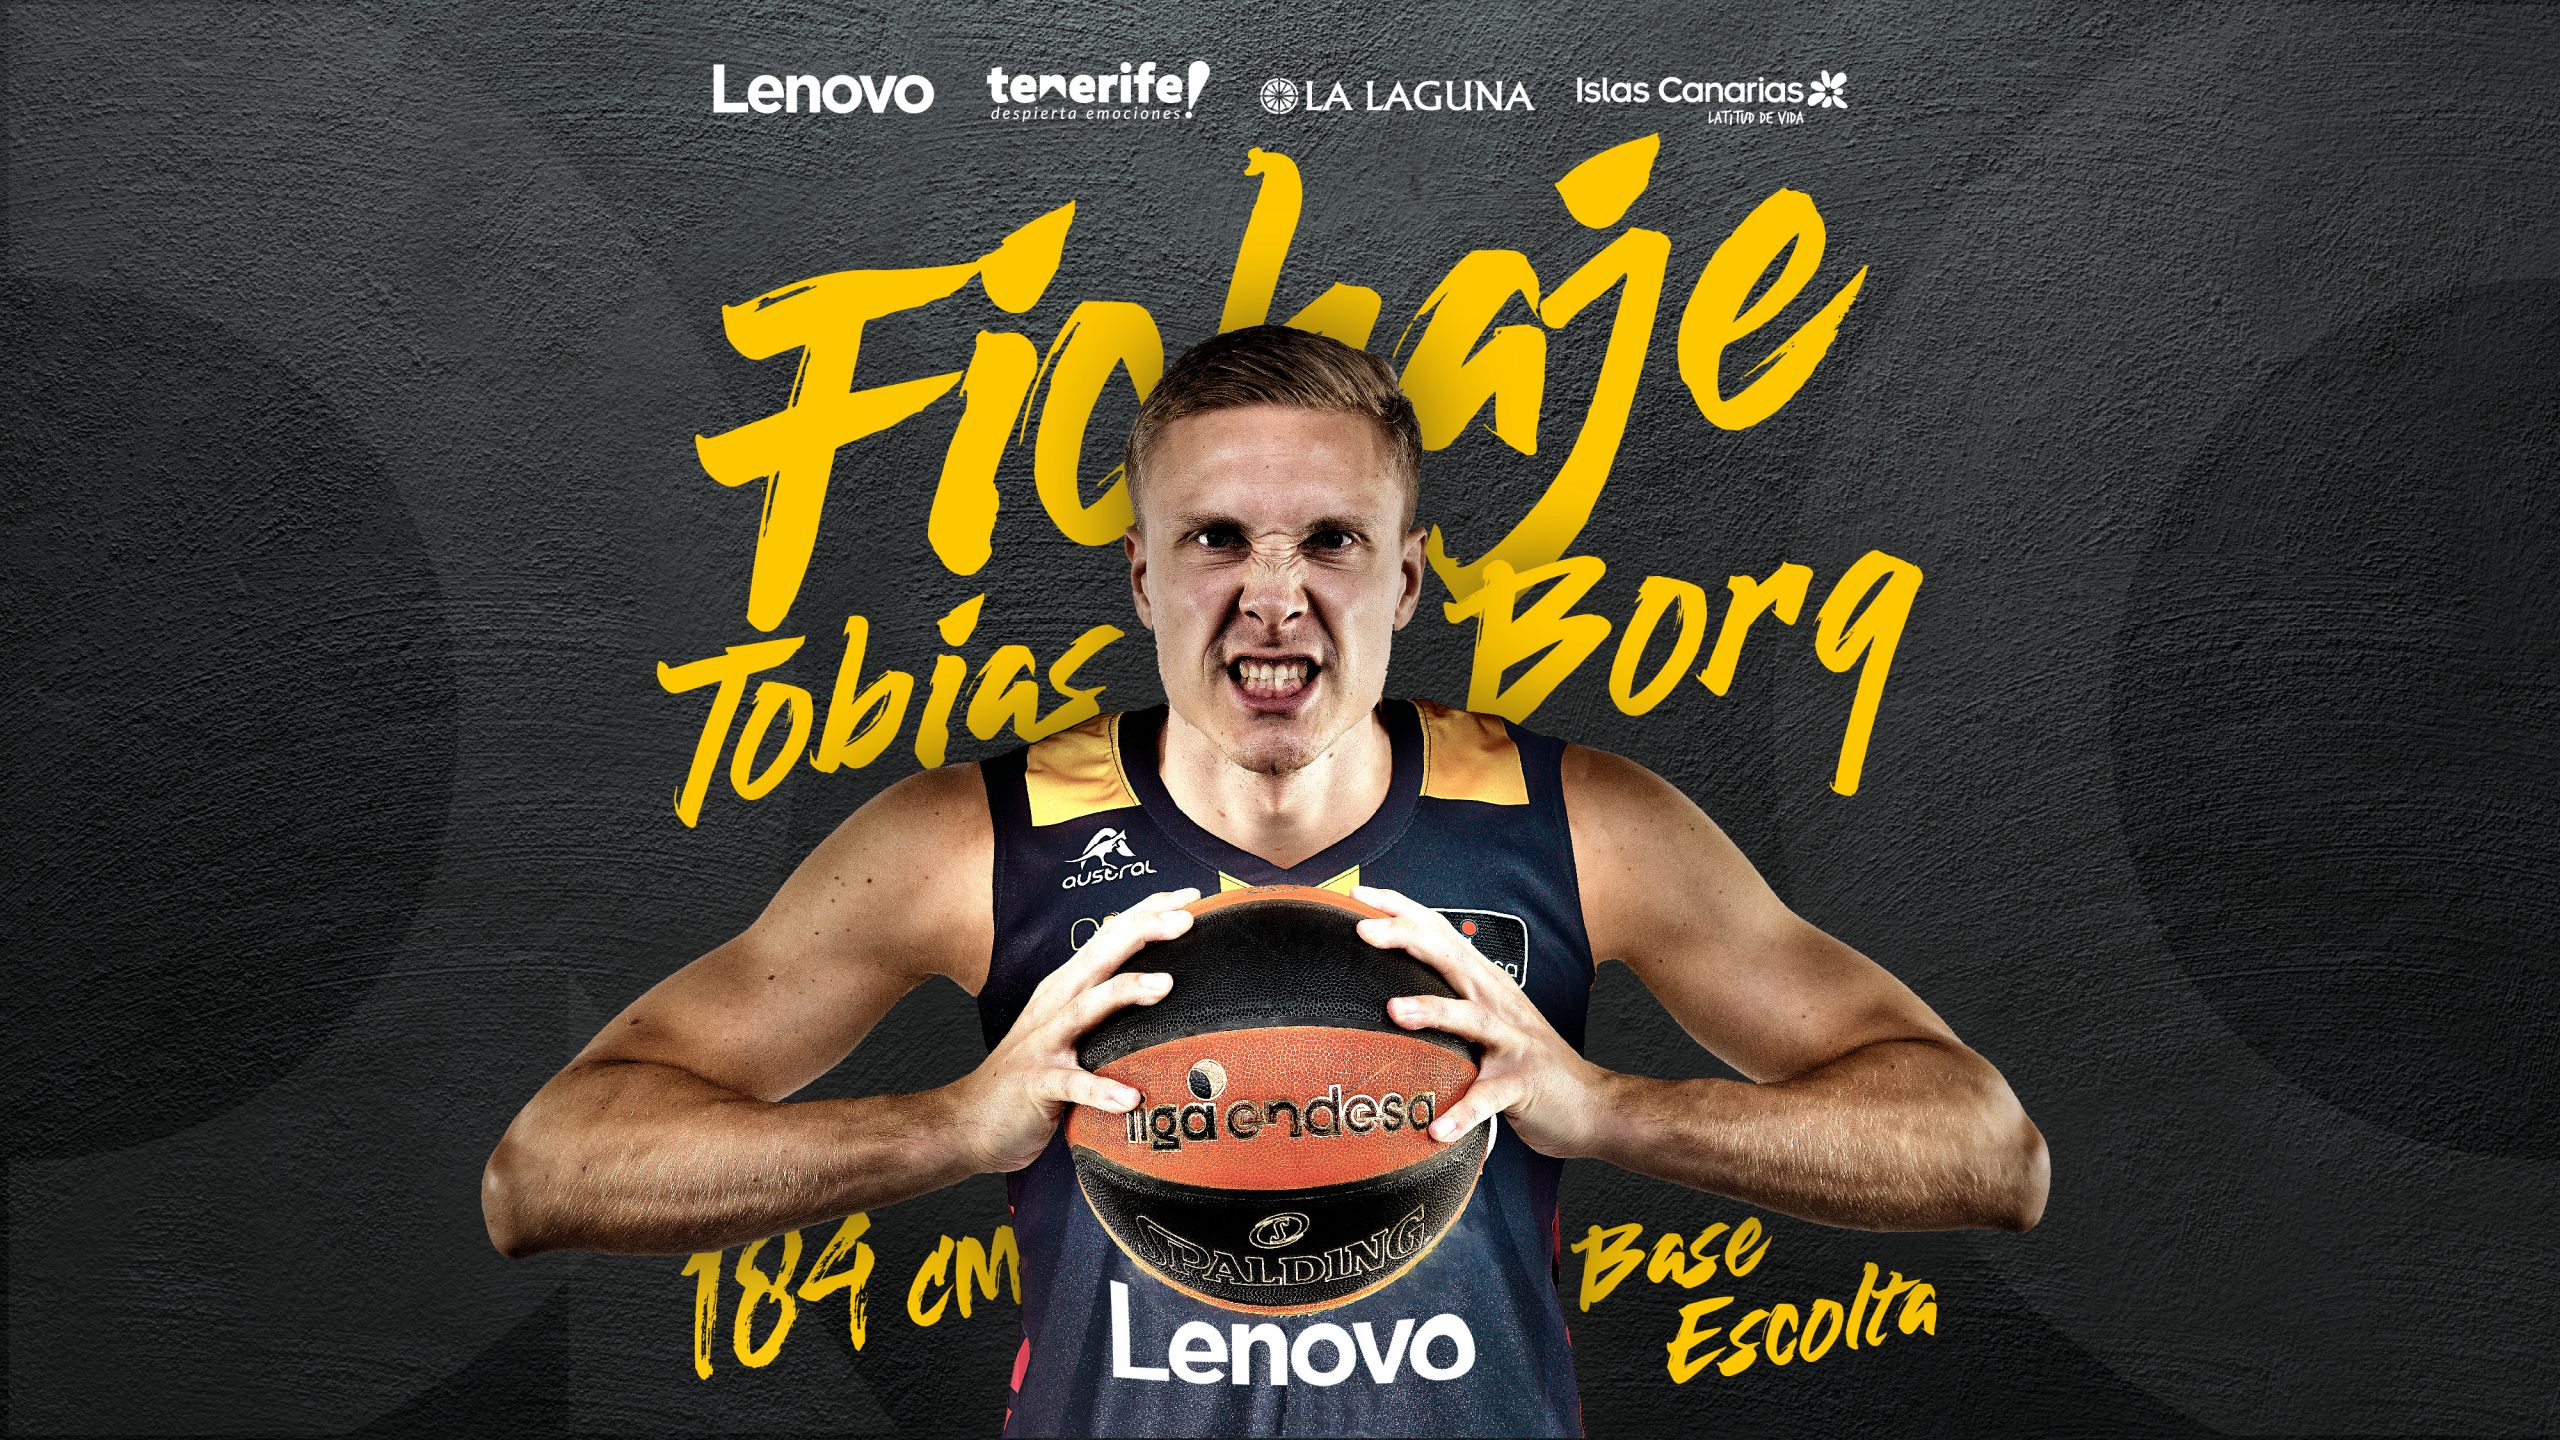 El Lenovo Tenerife ficha a Tobias Borg